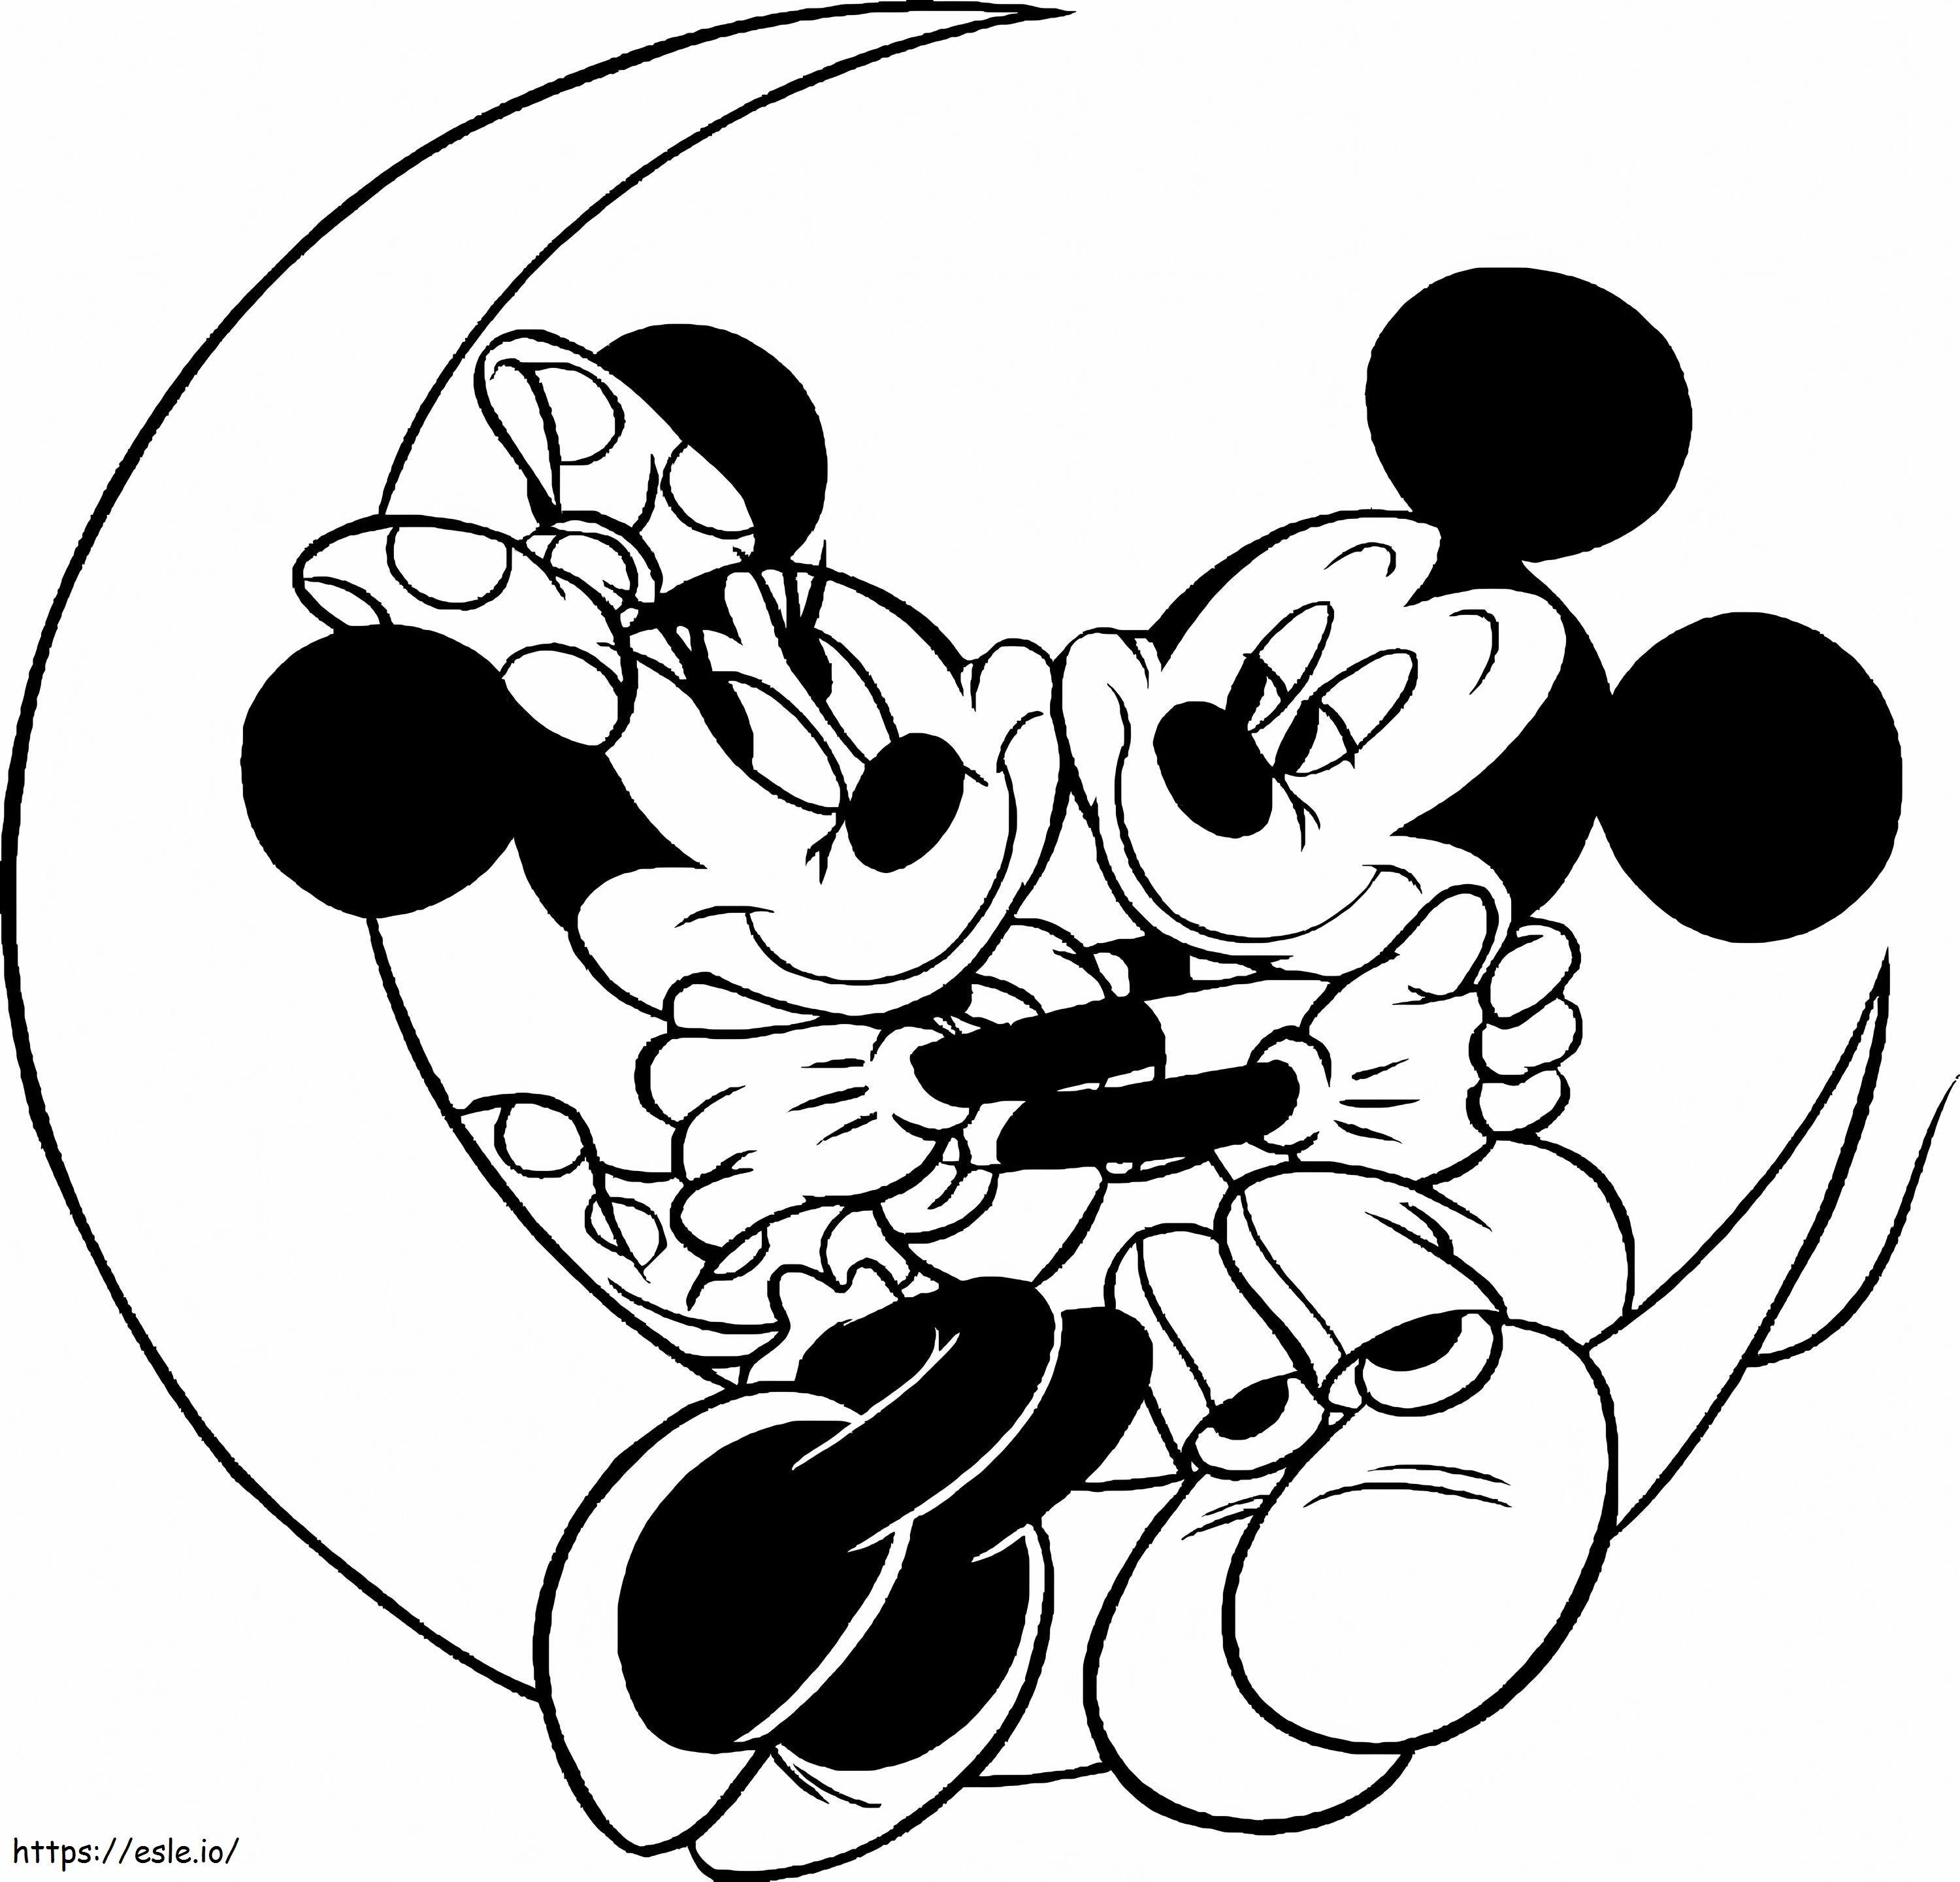 Mickey e Minnie Mouse na lua para colorir